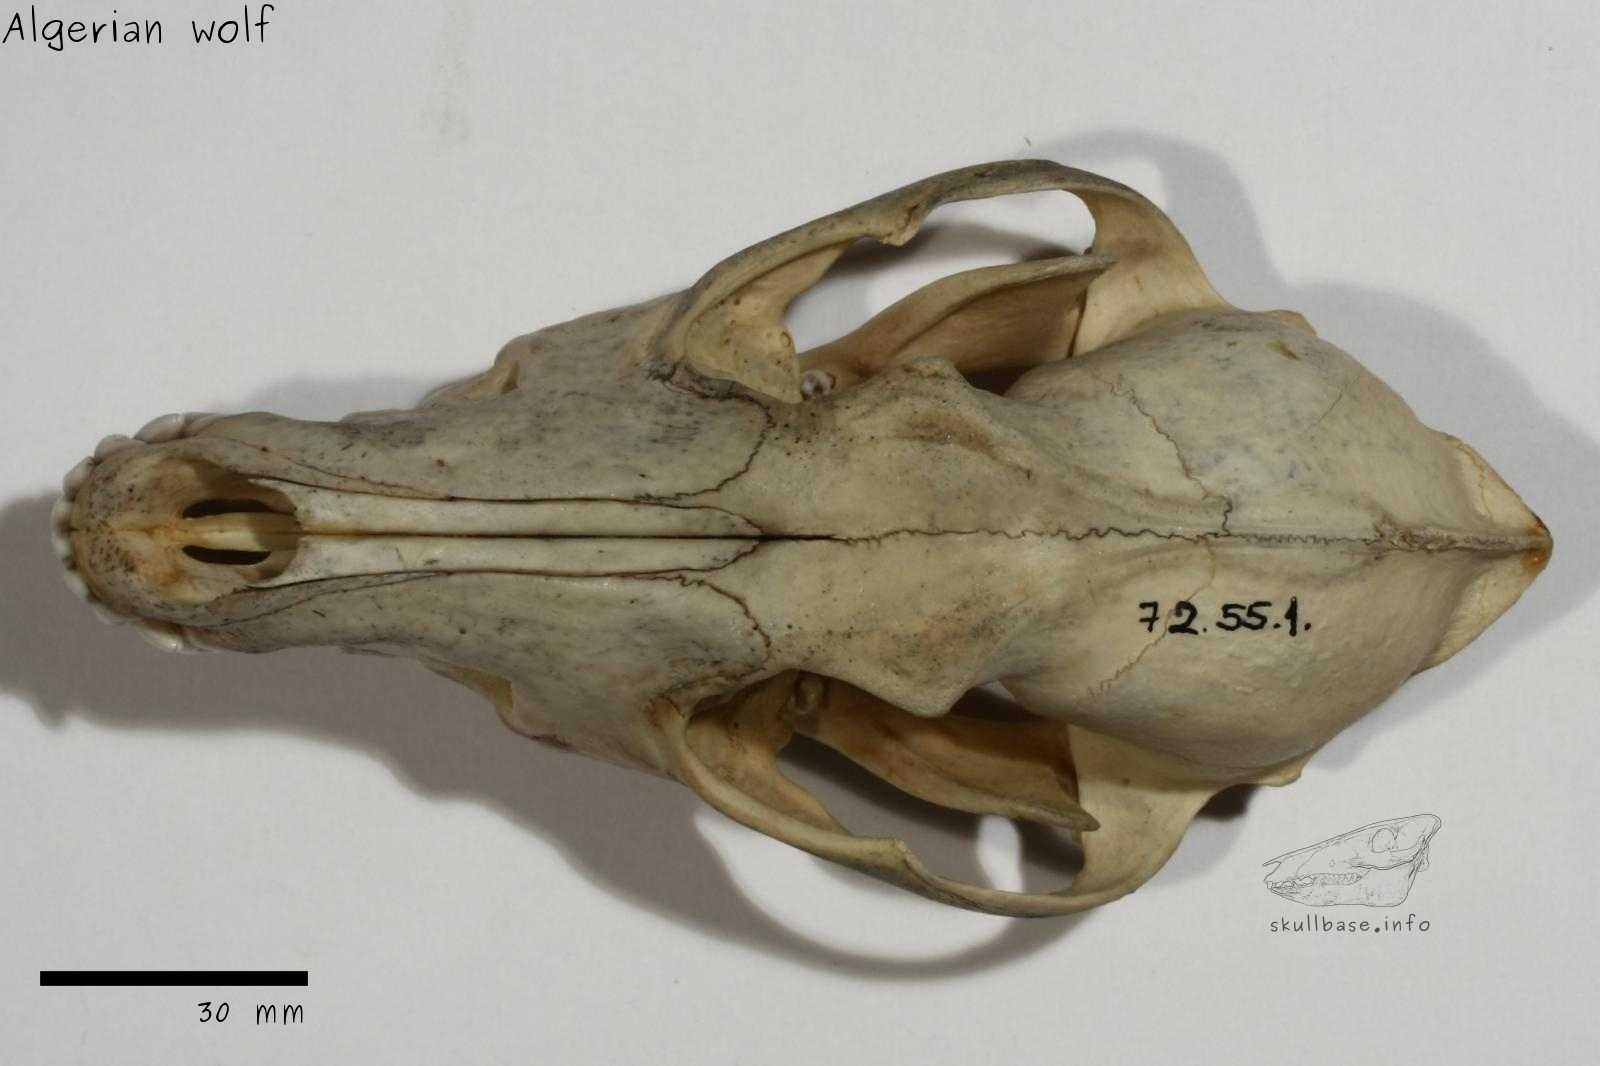 Algerian wolf (Canis anthus algirensis) skull dorsal view